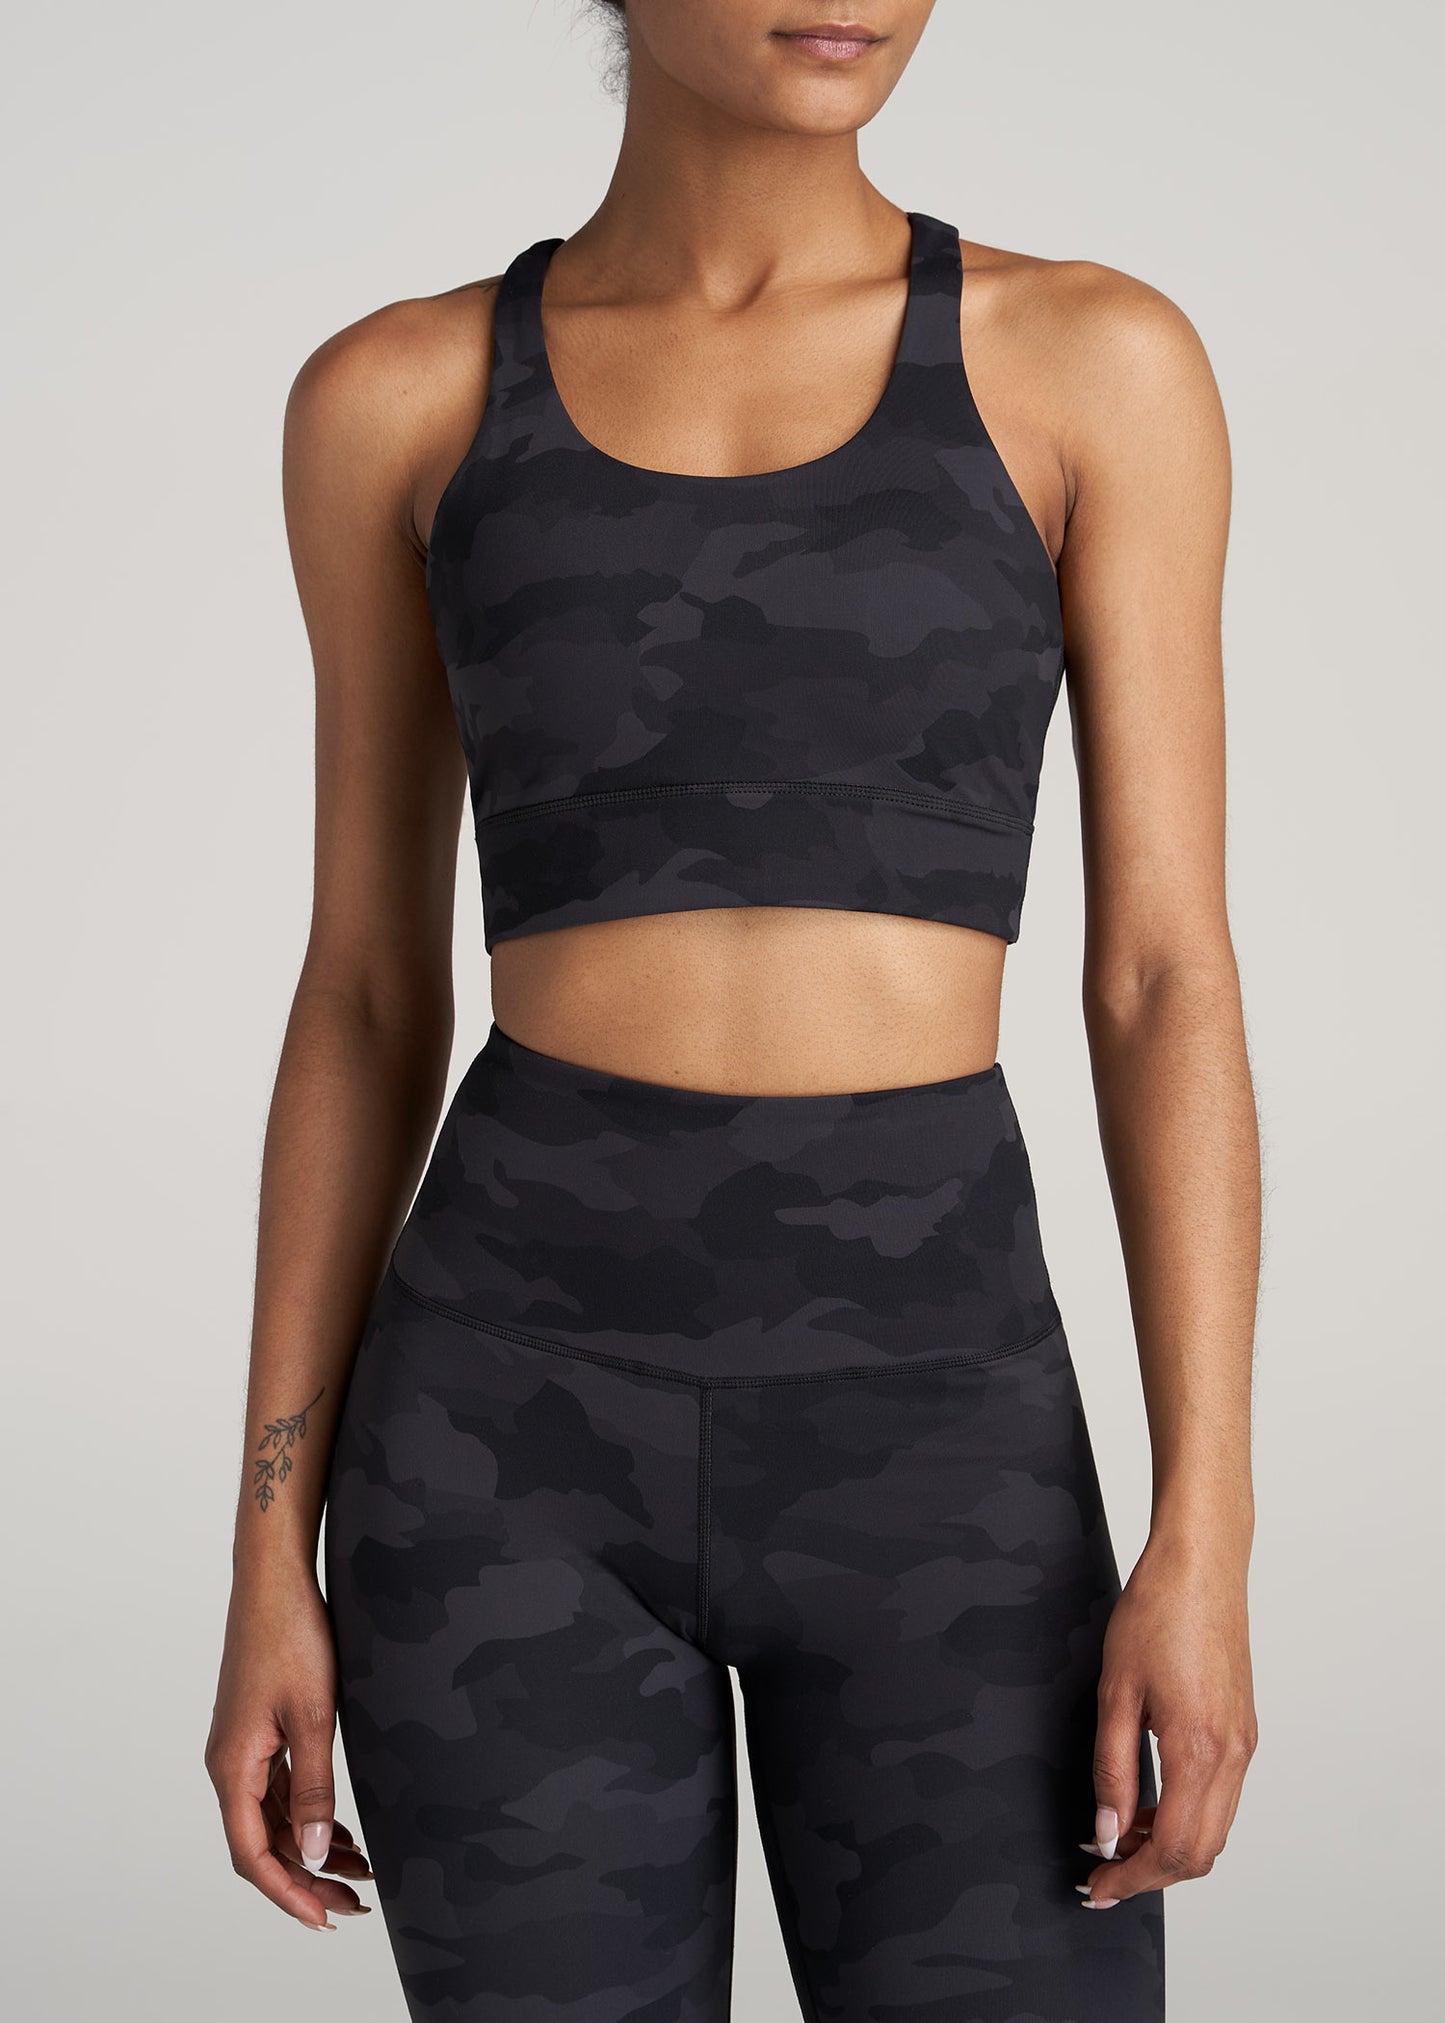 Women's Black Camouflage Sports Bra